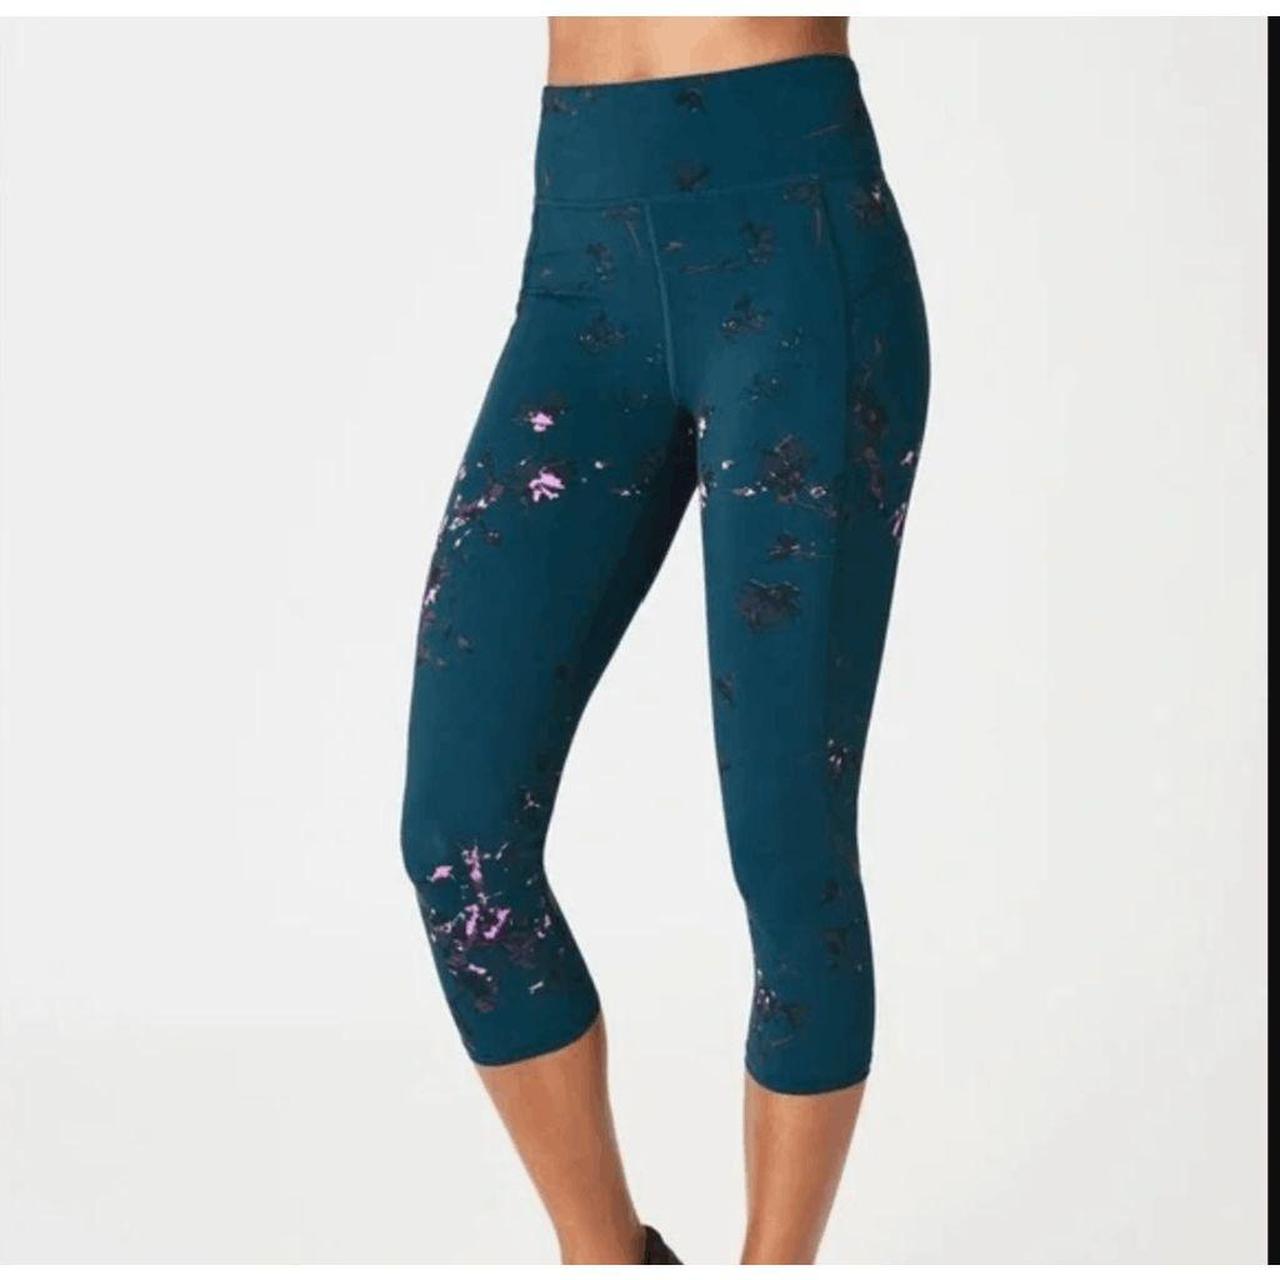 Brand: Sweaty Betty Features: Zero Gravity leggings - Depop